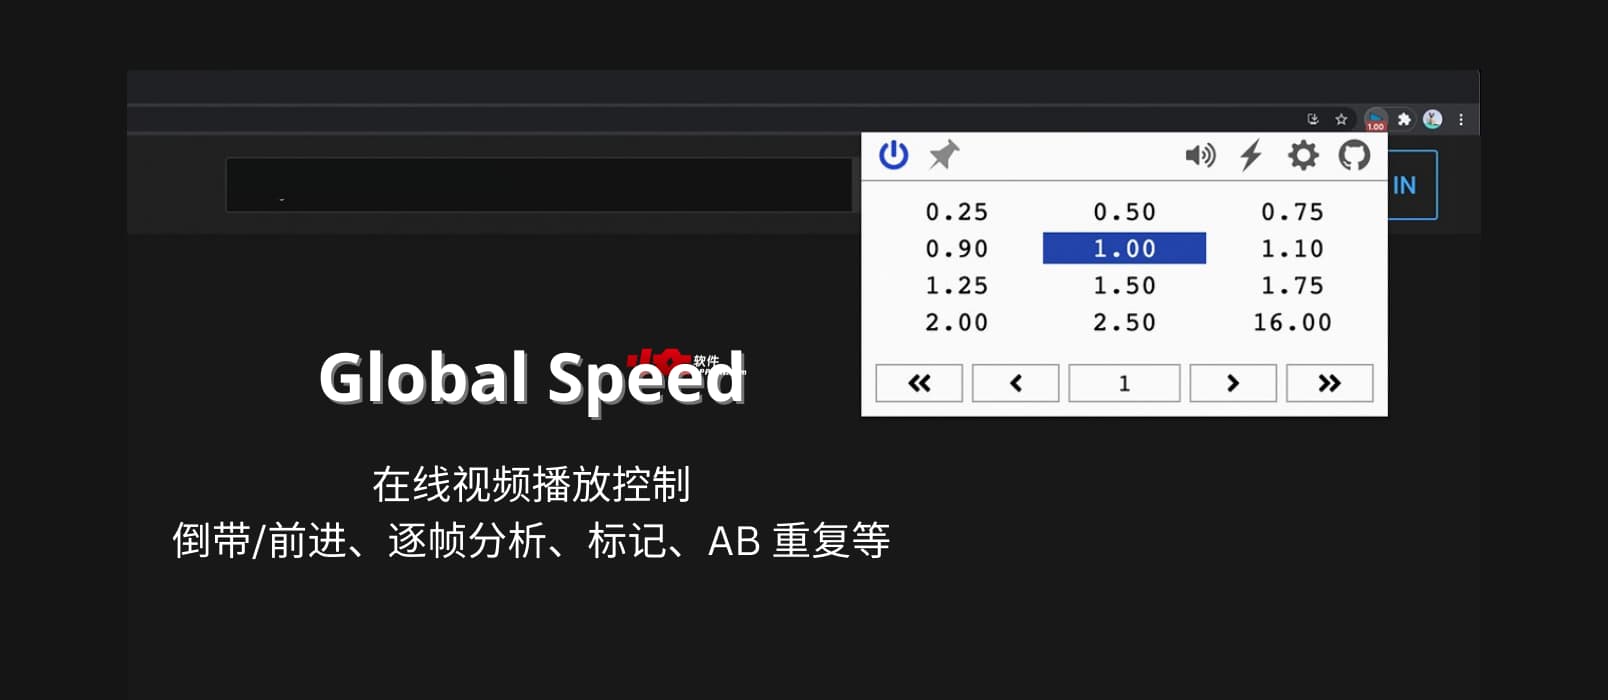 Global Speed - 在线视频播放控制：倍速、倒带/前进、逐帧分析、标记、AB 重复等[Chrome/Firefox]